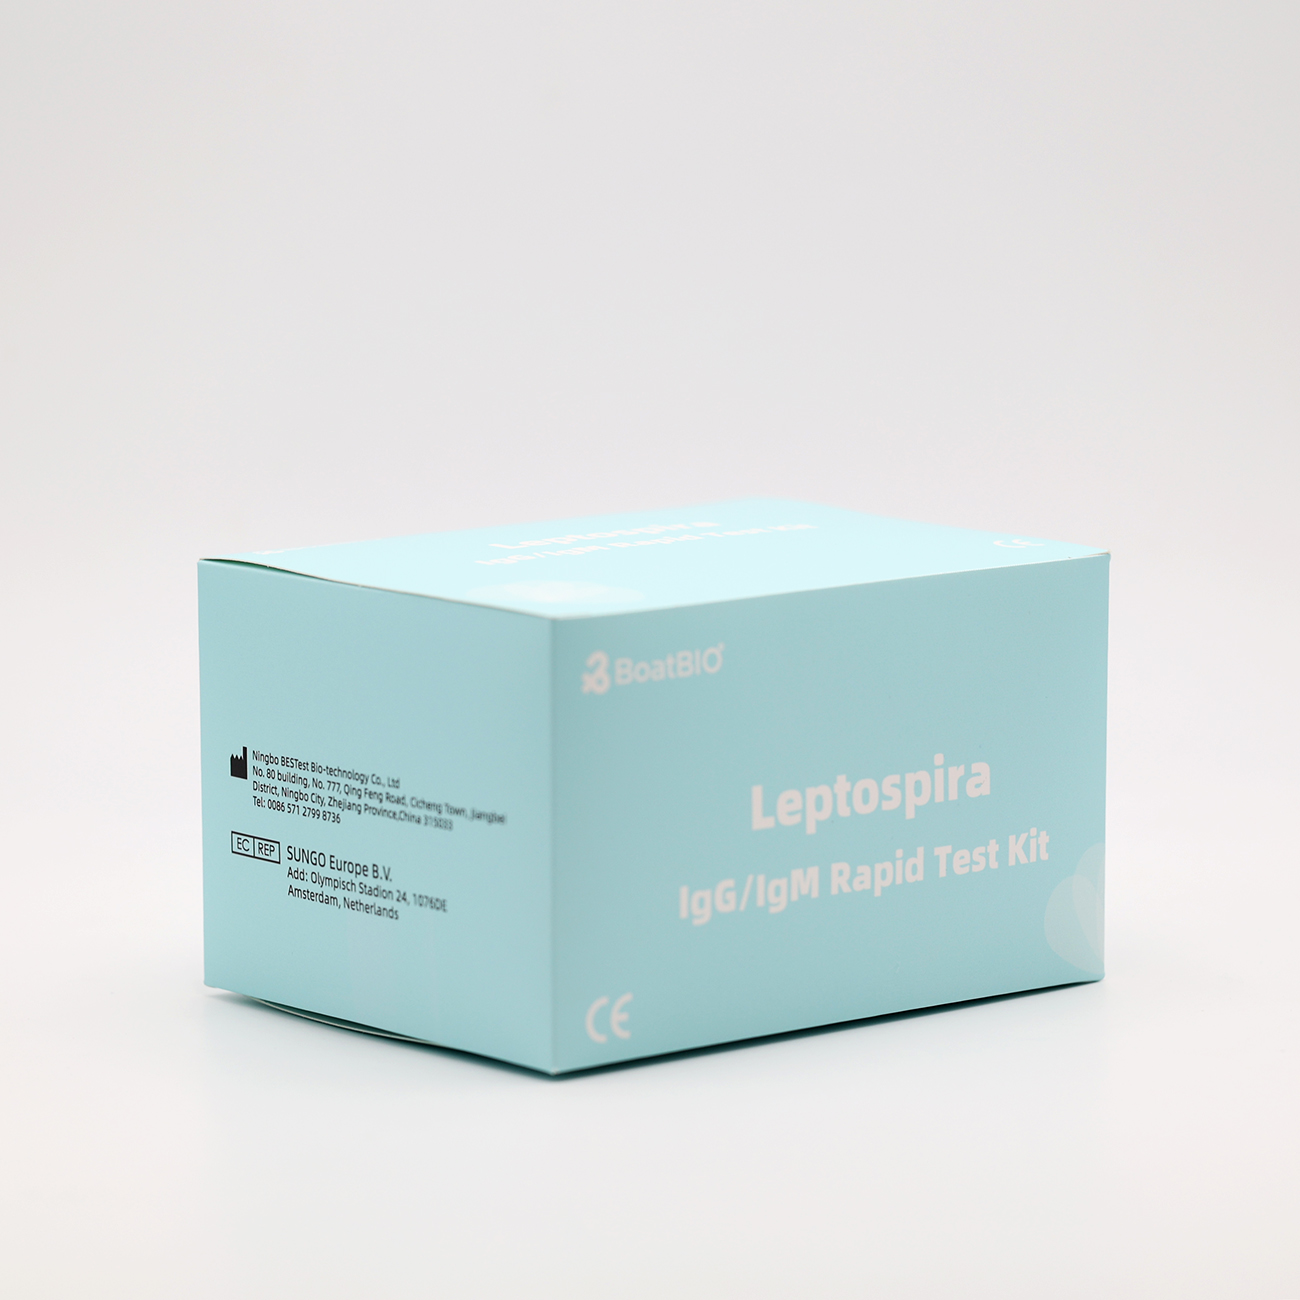 Leptospira IgG/IgM testo rinkinys